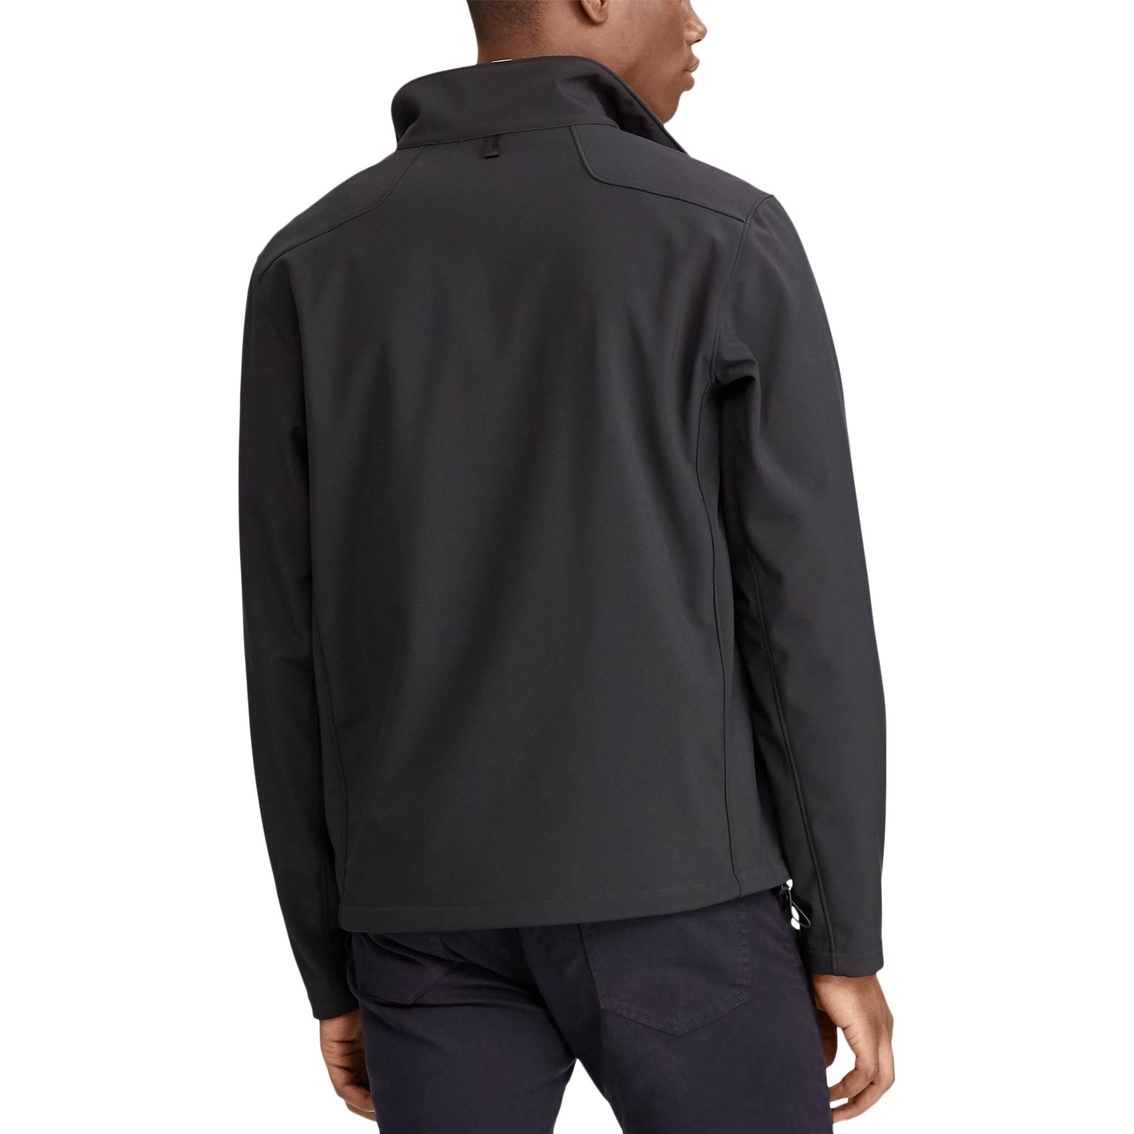 Polo Ralph Lauren Water Repellent Jacket | Jackets | Clothing ...